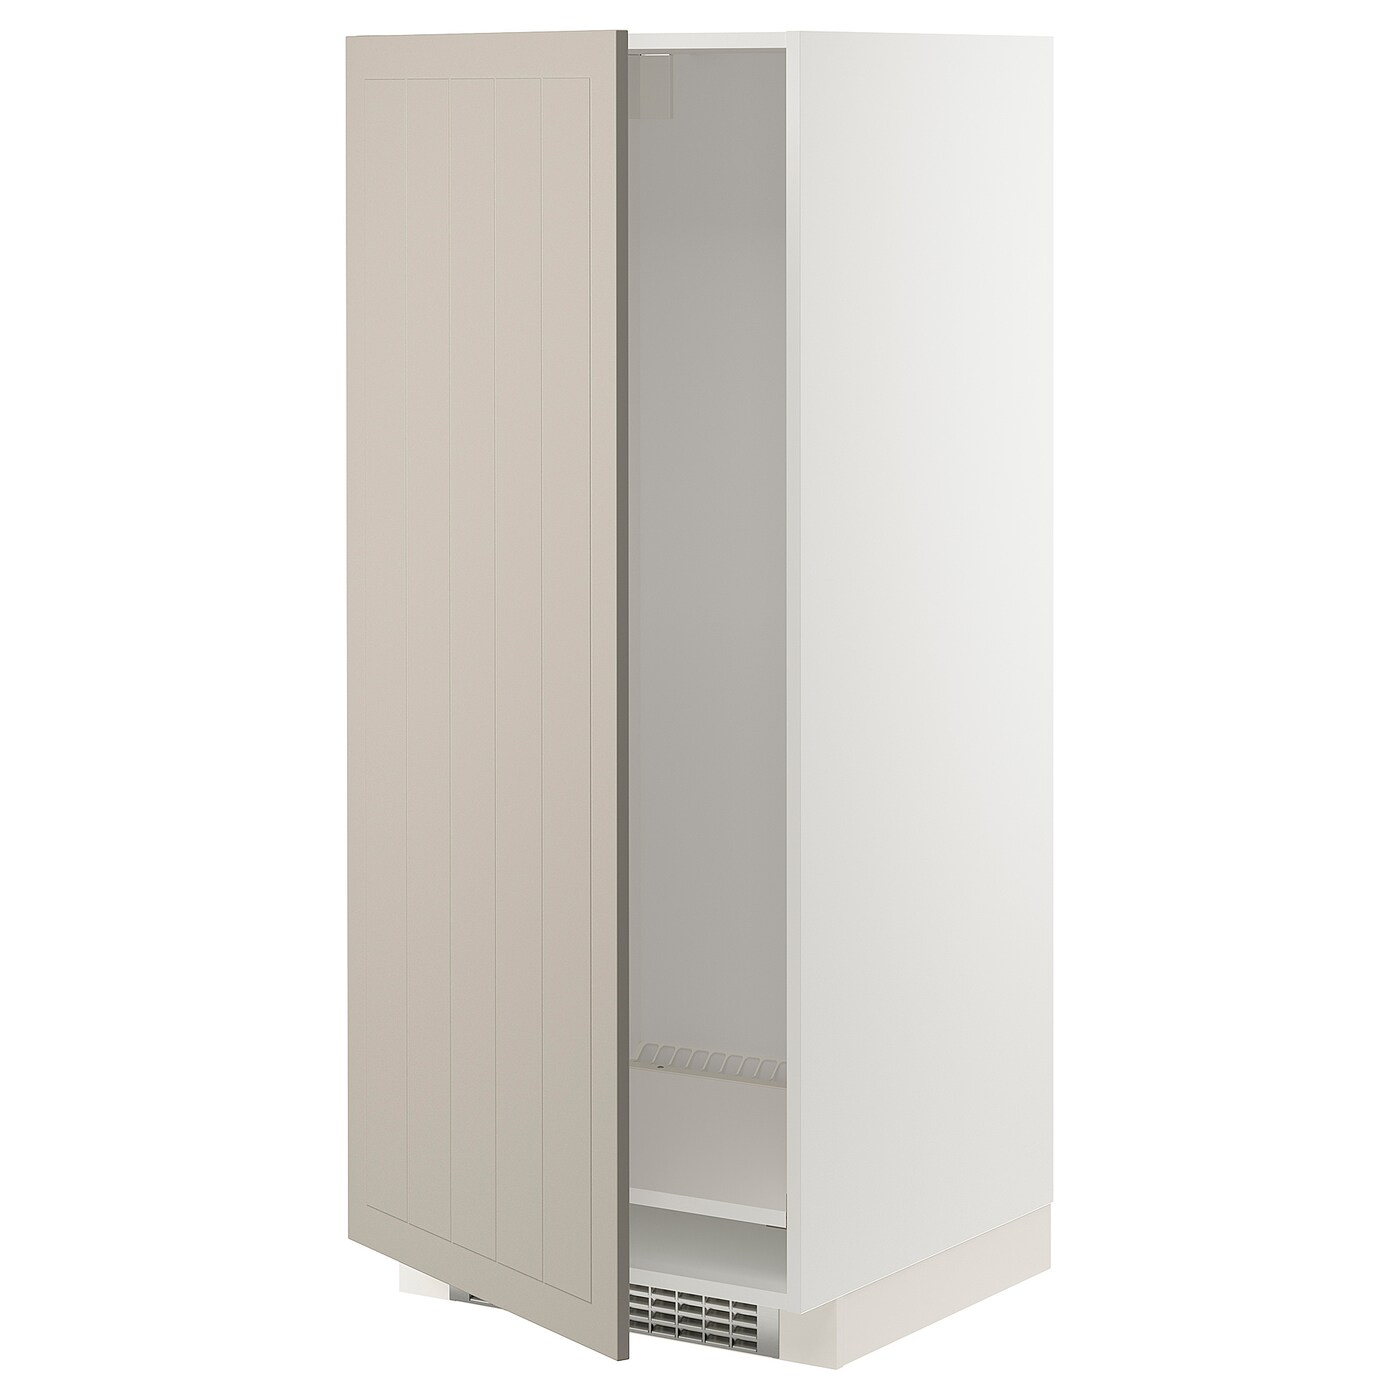 Напольный кухонный шкаф - IKEA METOD/МЕТОД ИКЕА, 140х60х60 см, белый/бежевый